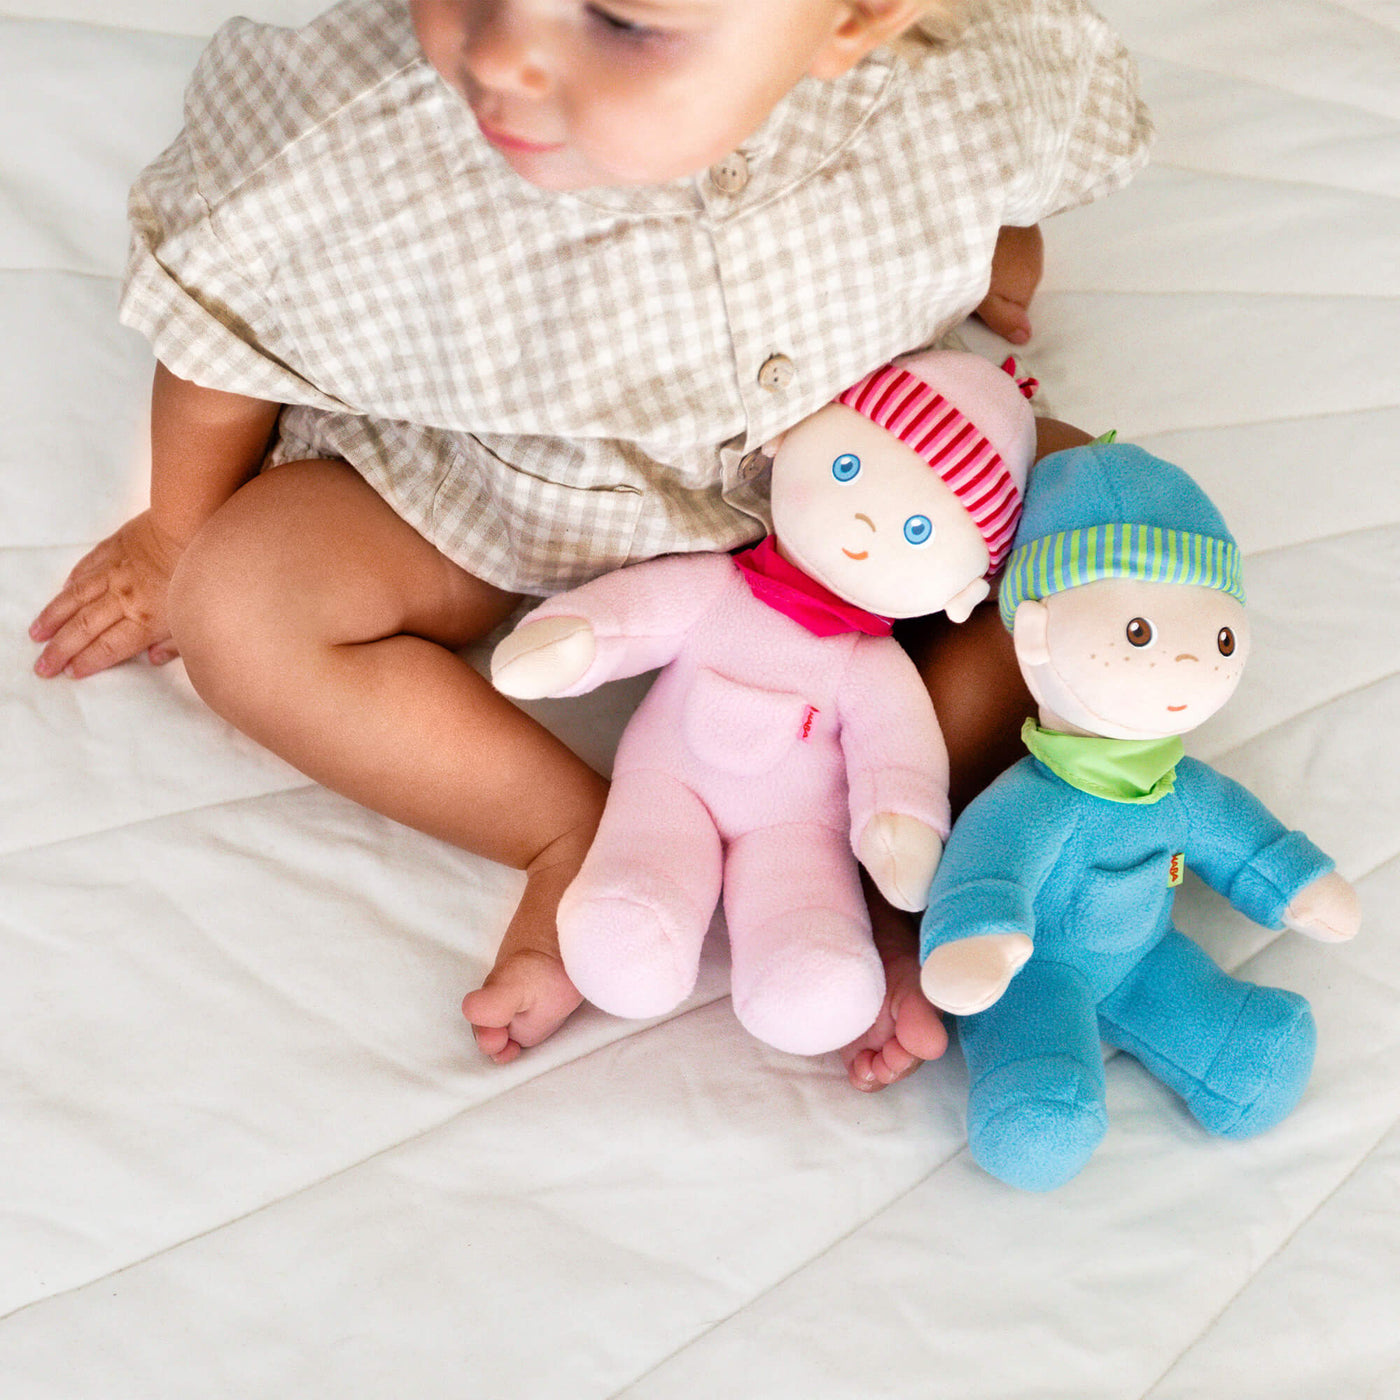 Snug Up 8” Pink Baby Doll | Plush Toys for Babies | HABA USA